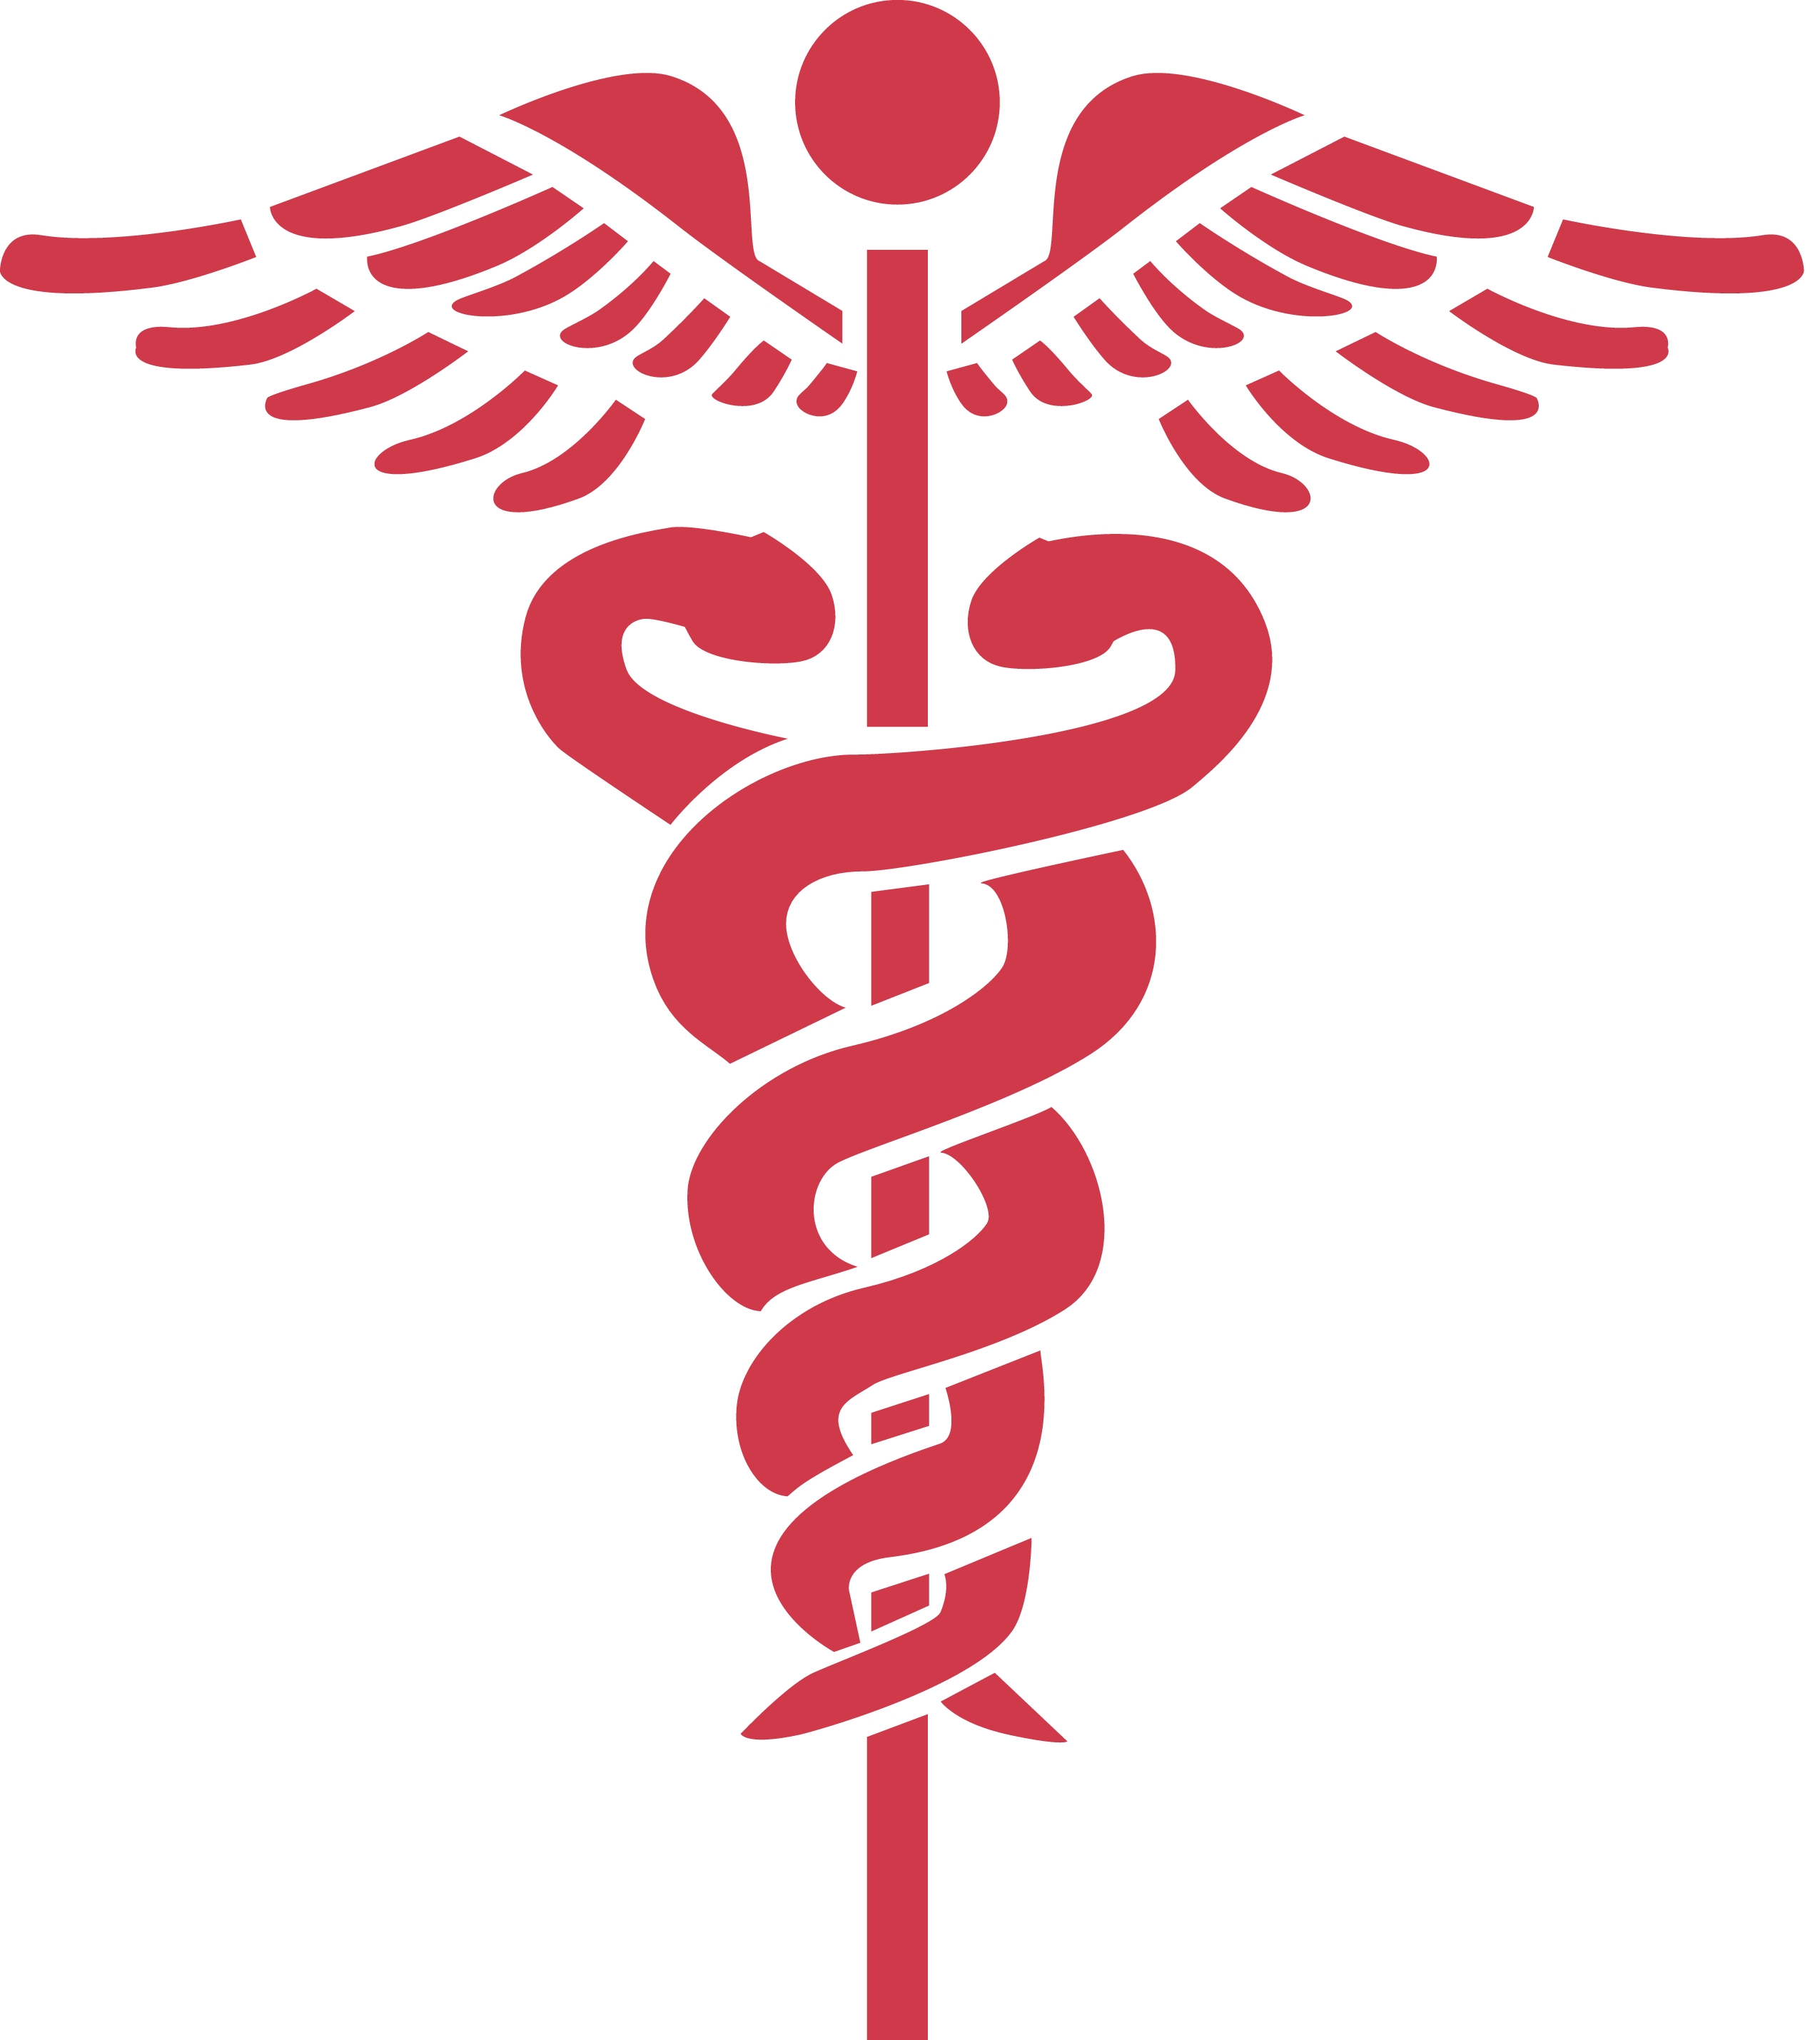 Free Medical Symbol Cliparts, Download Free Medical Symbol Cliparts png ...